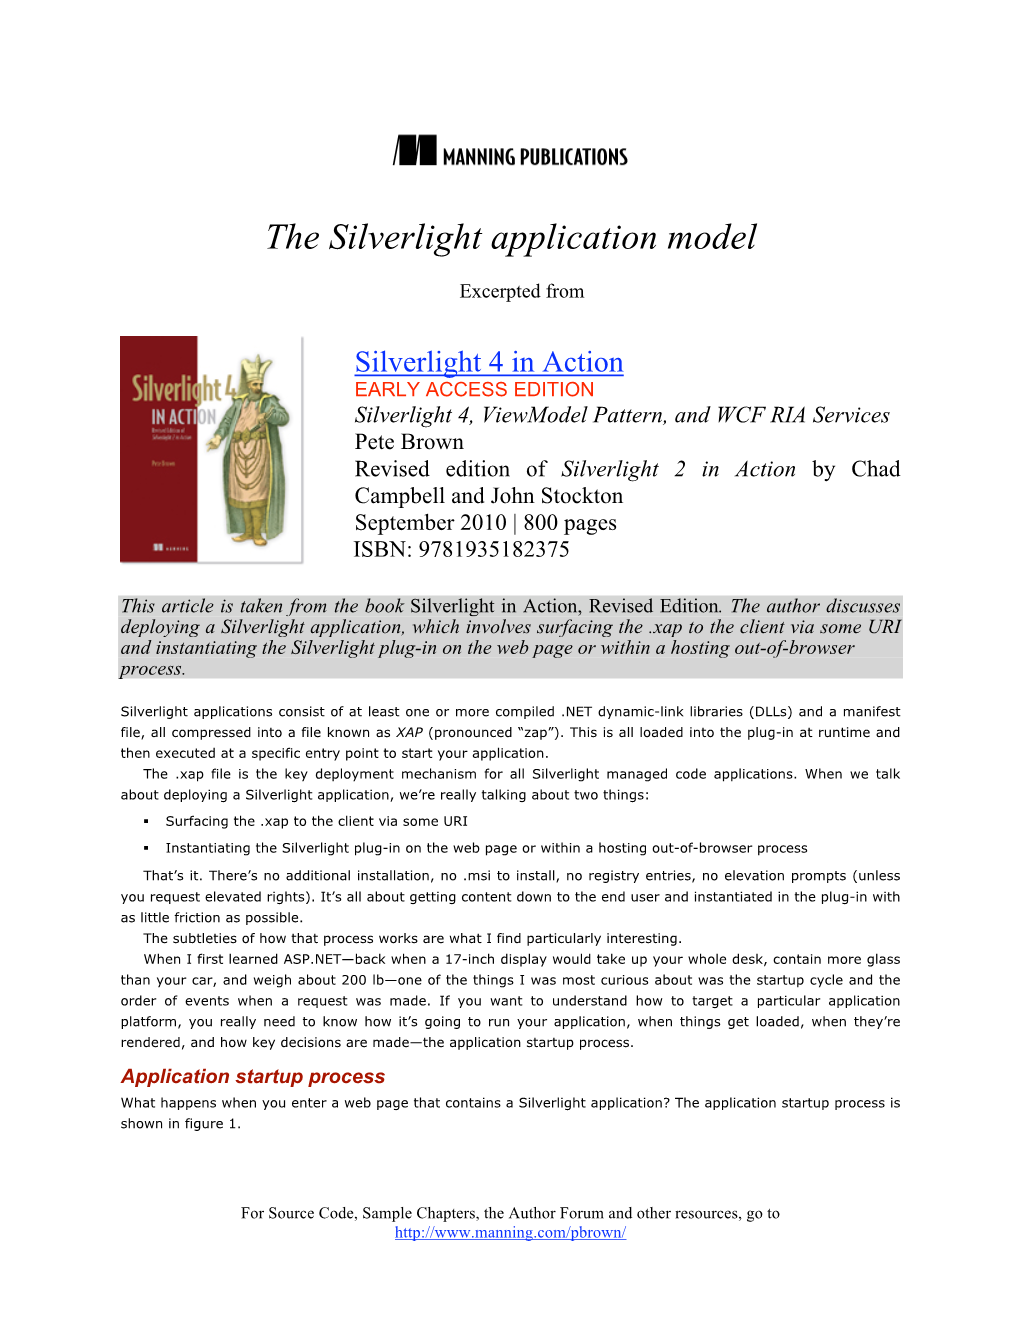 The Silverlight Application Model